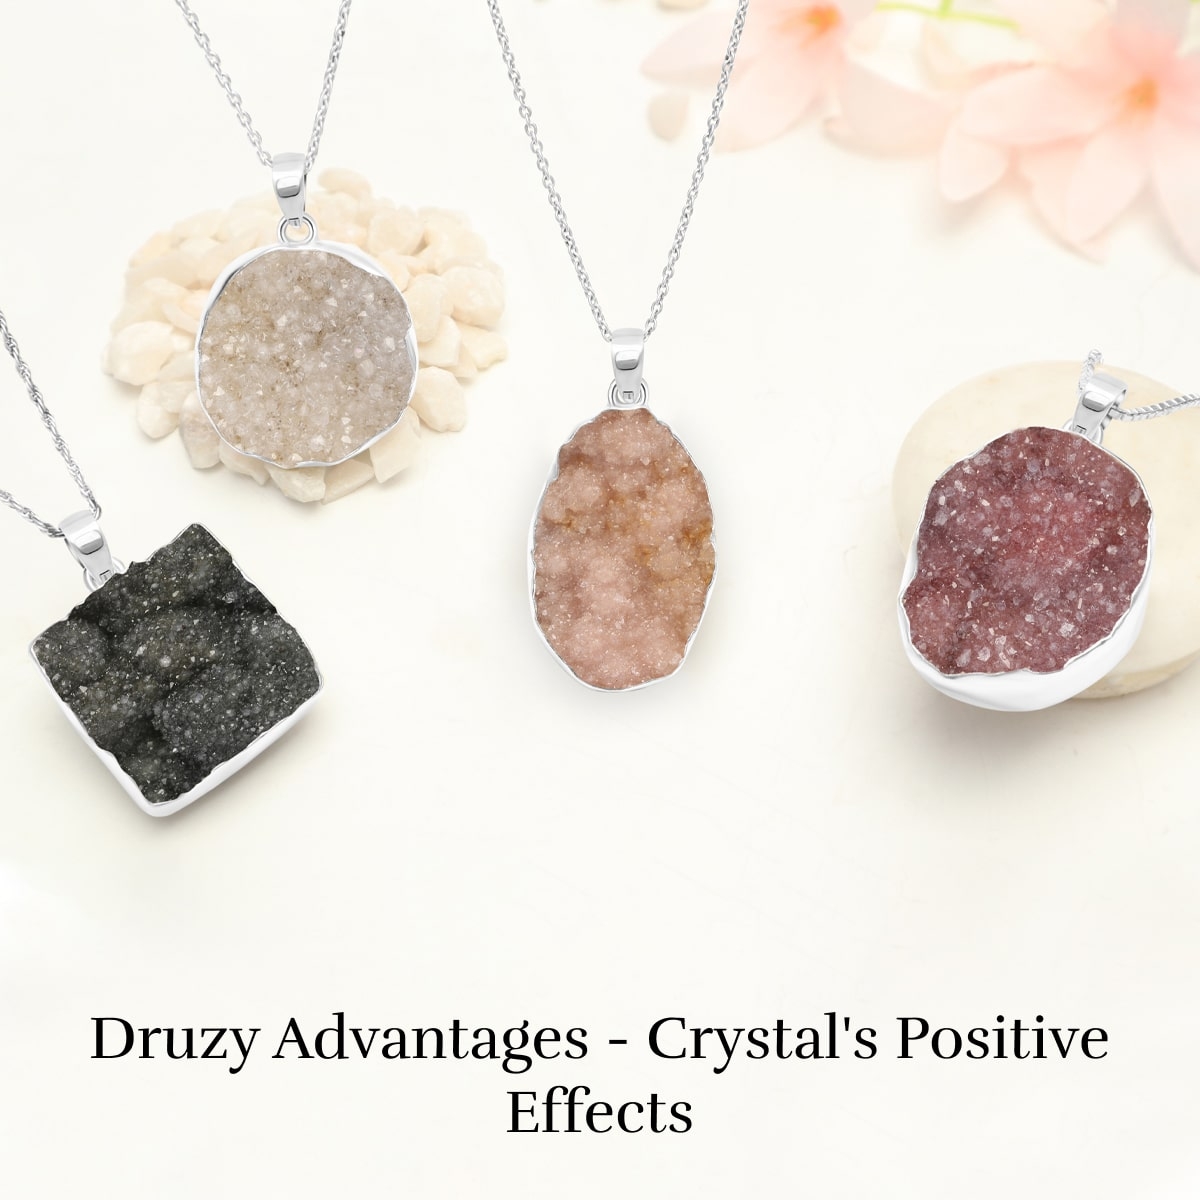 Benefits of Druzy Crystal